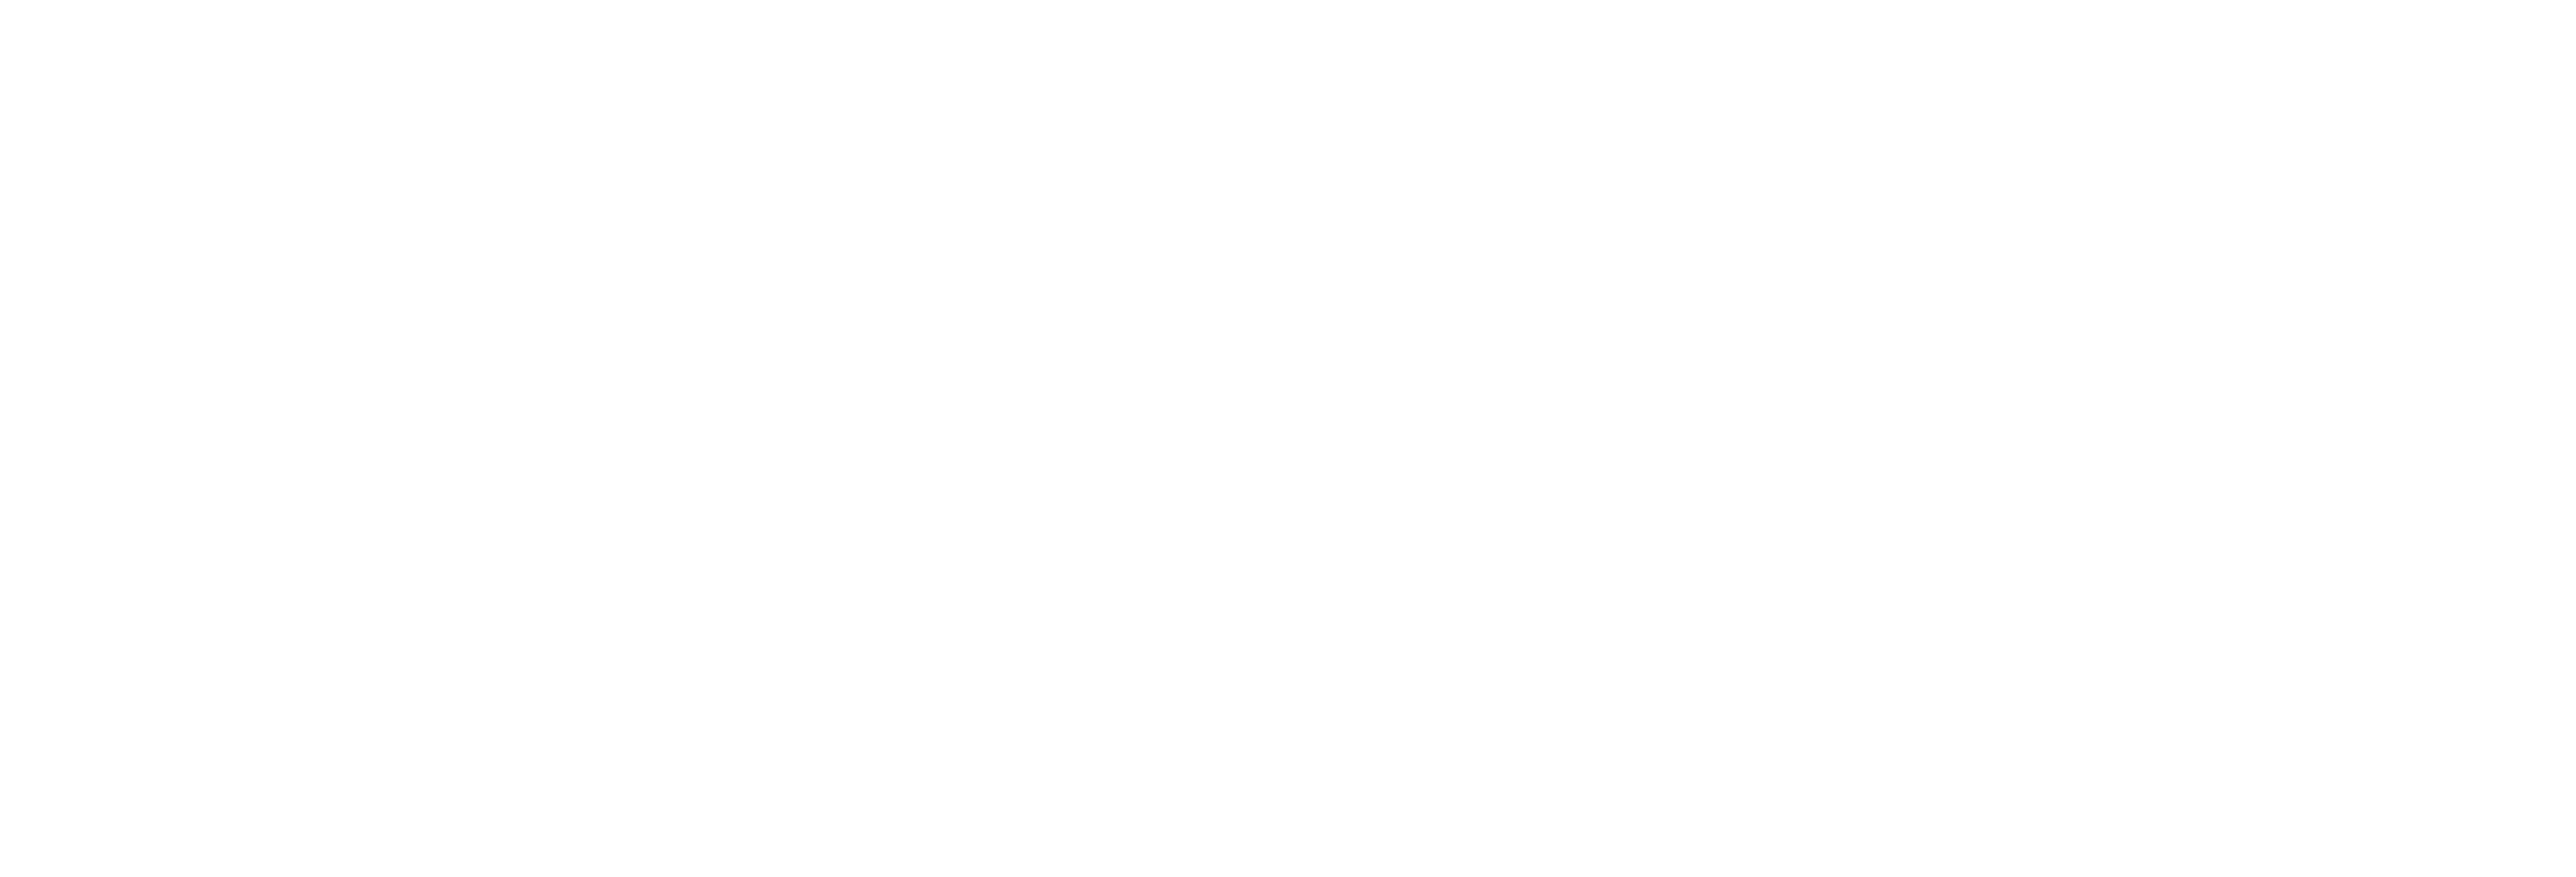 Wire Business Club Spain